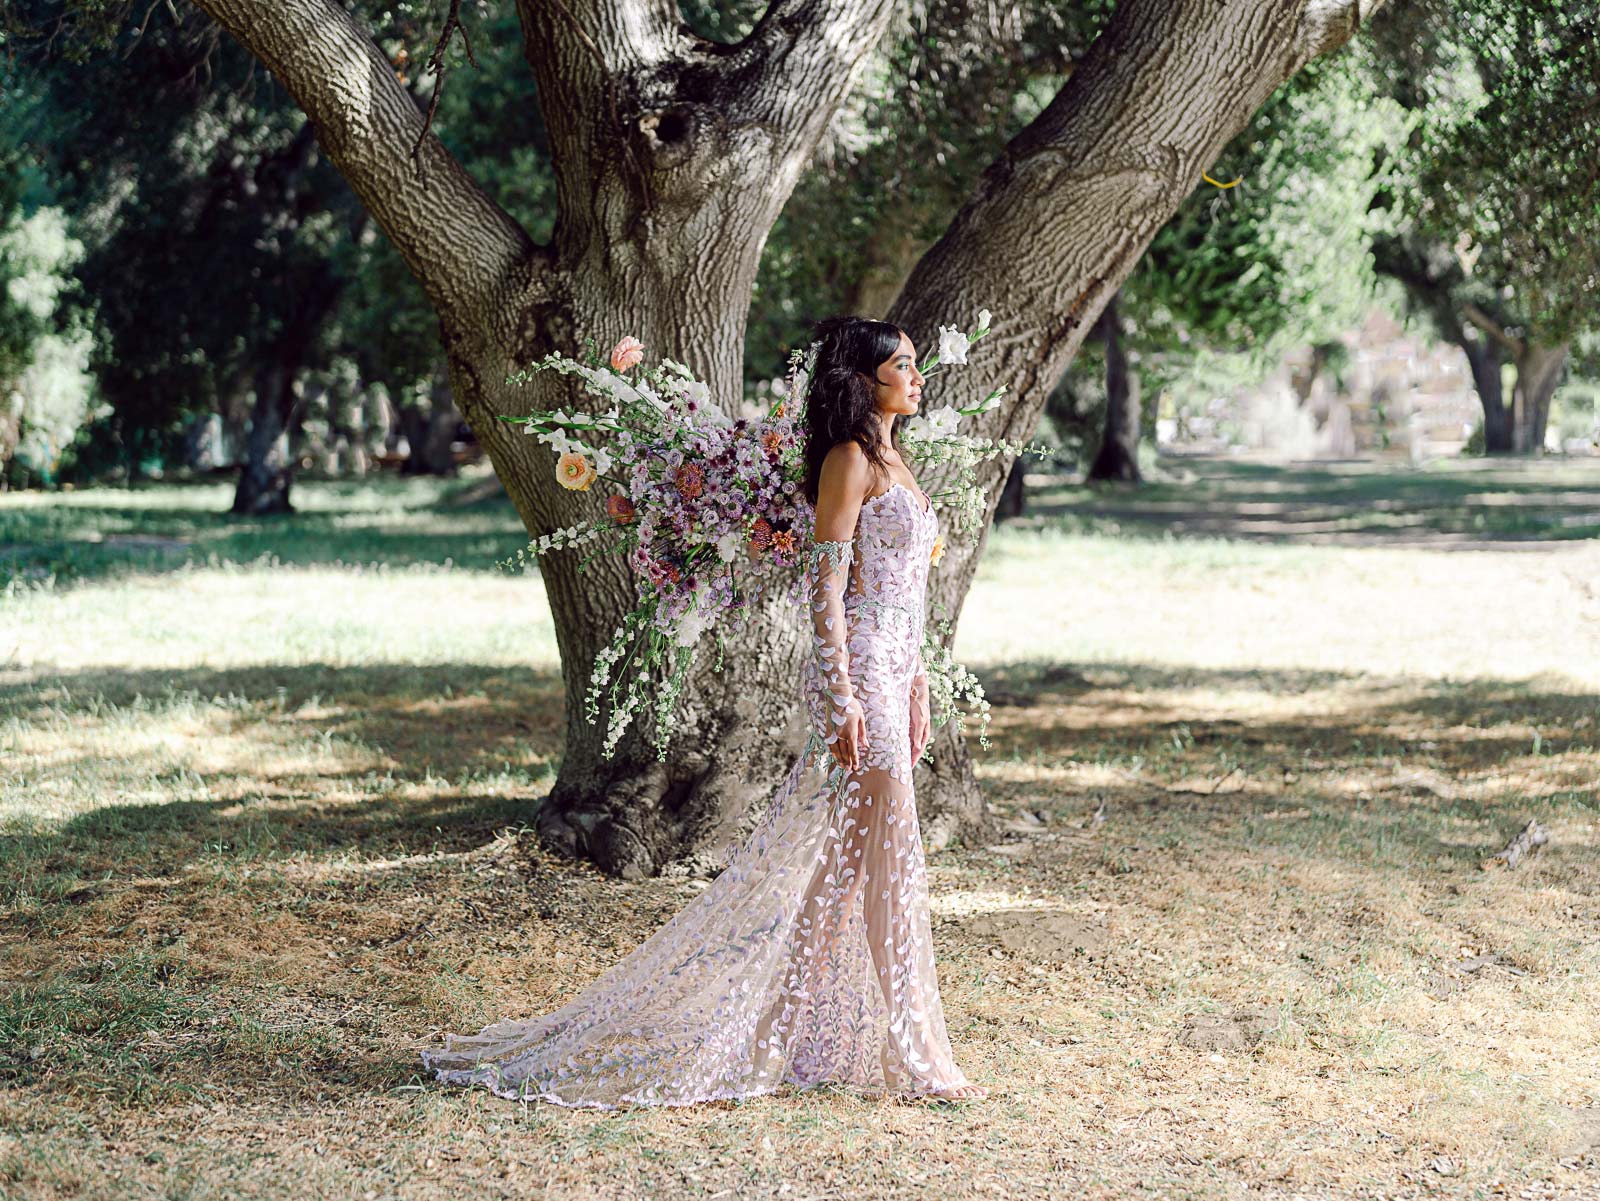 Floral Lace Applique Blush Tulle Designer Prom Gown - Promfy